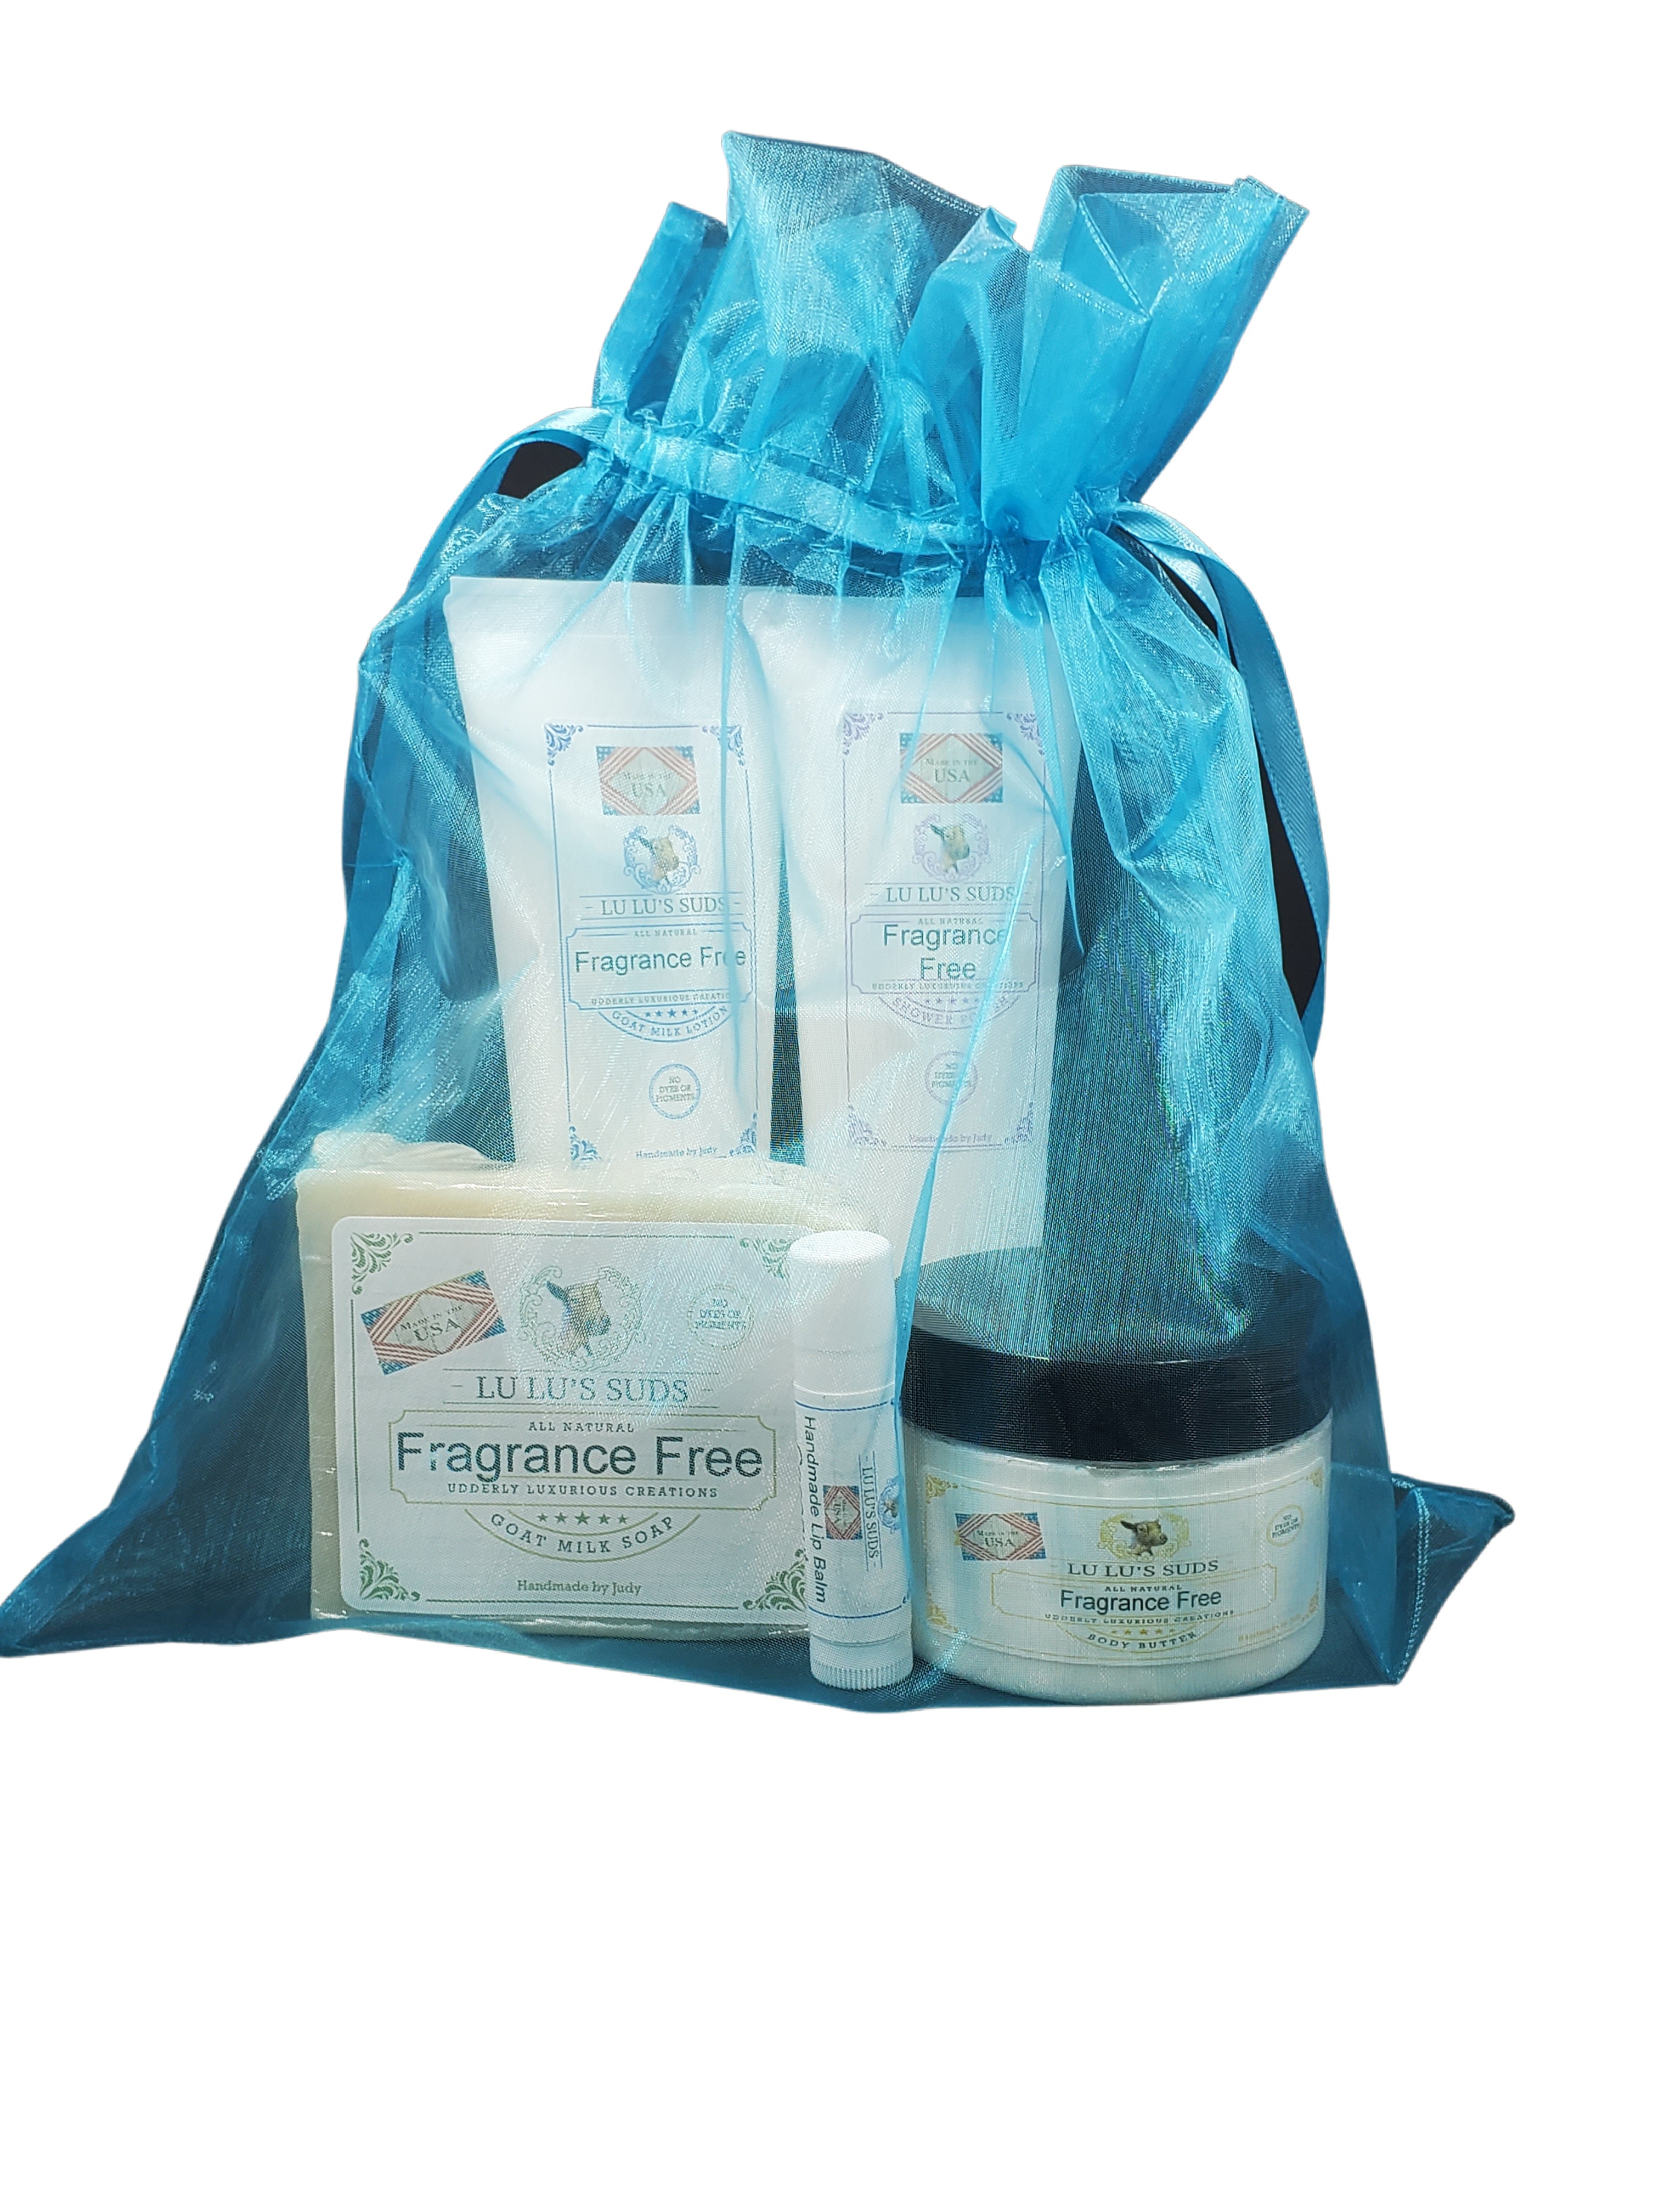 Parker's White Sands Soap, Lotion, Body Butter, Body Shower Polish Gift Set